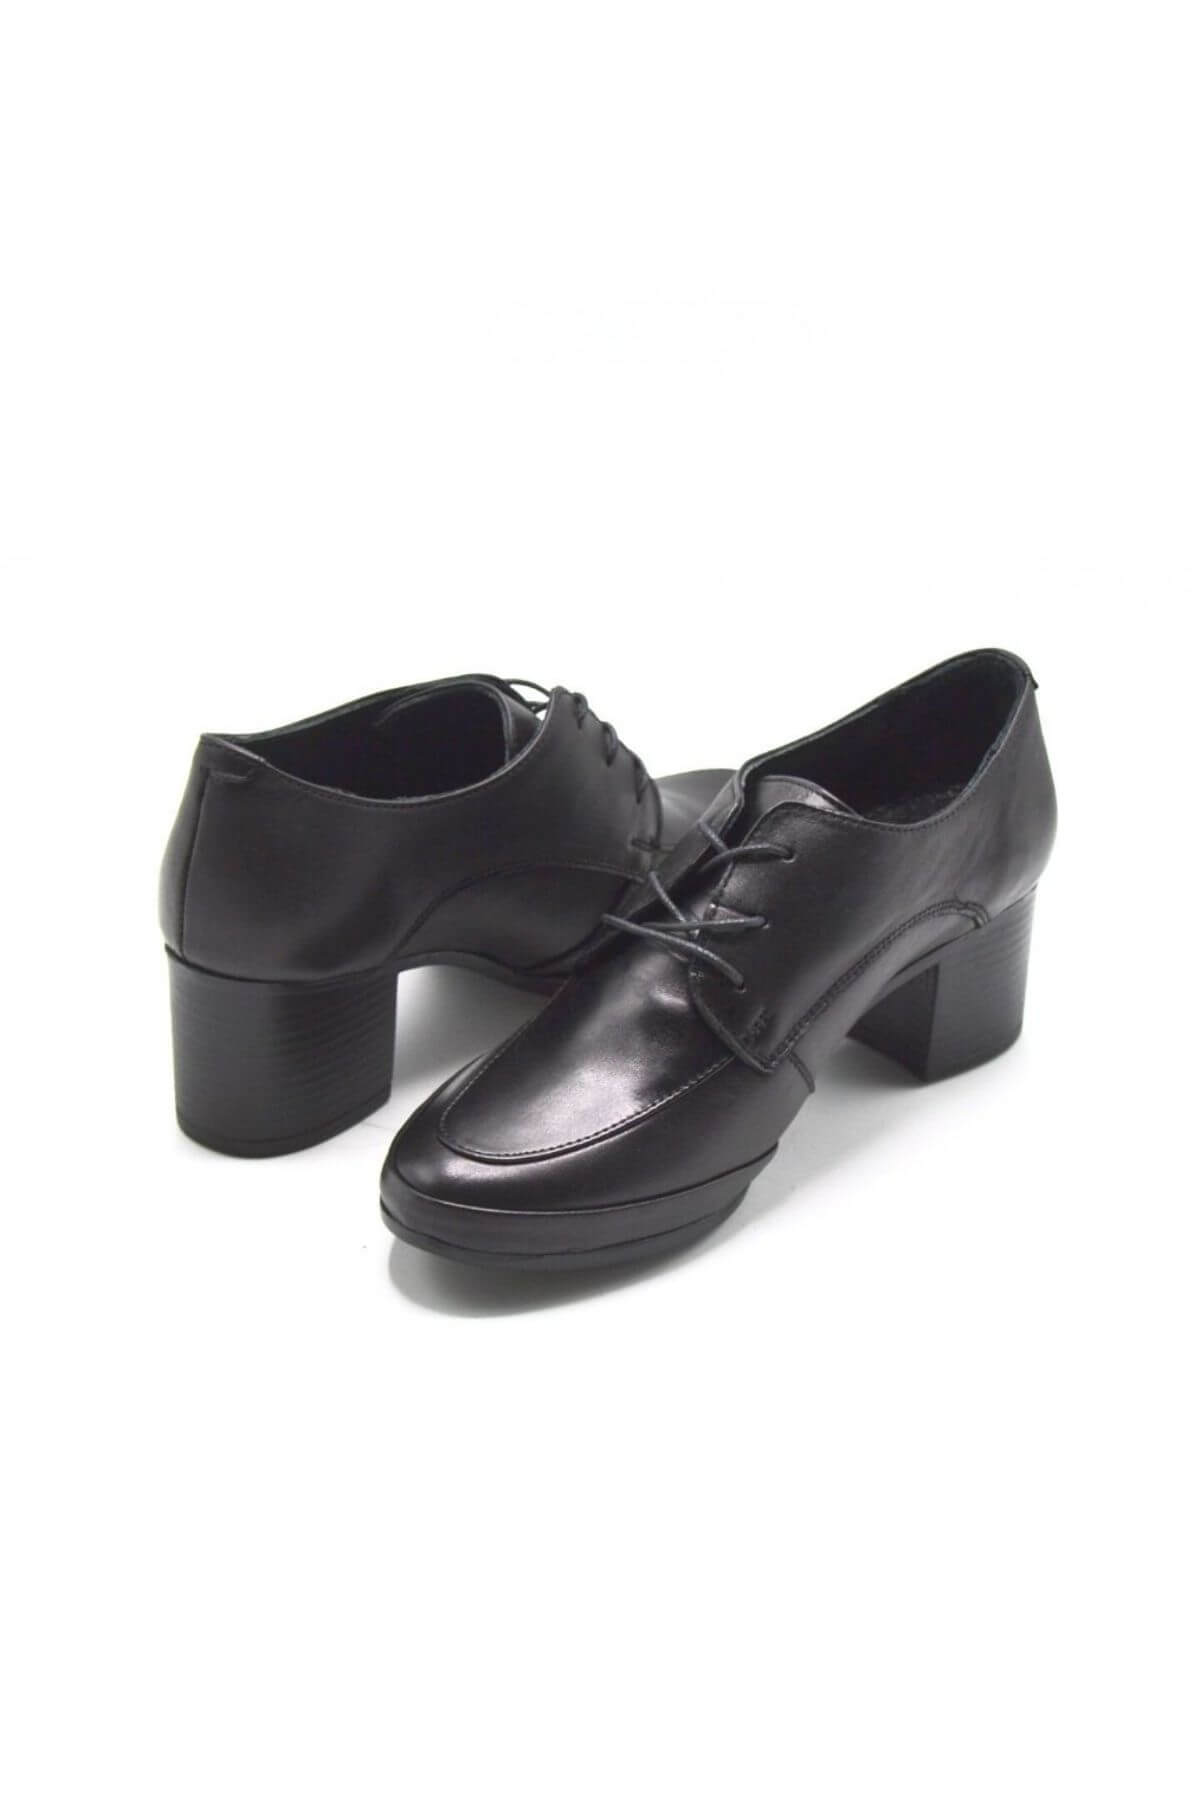 Kadın Topuklu Deri Ayakkabı Siyah 1911940K - Thumbnail